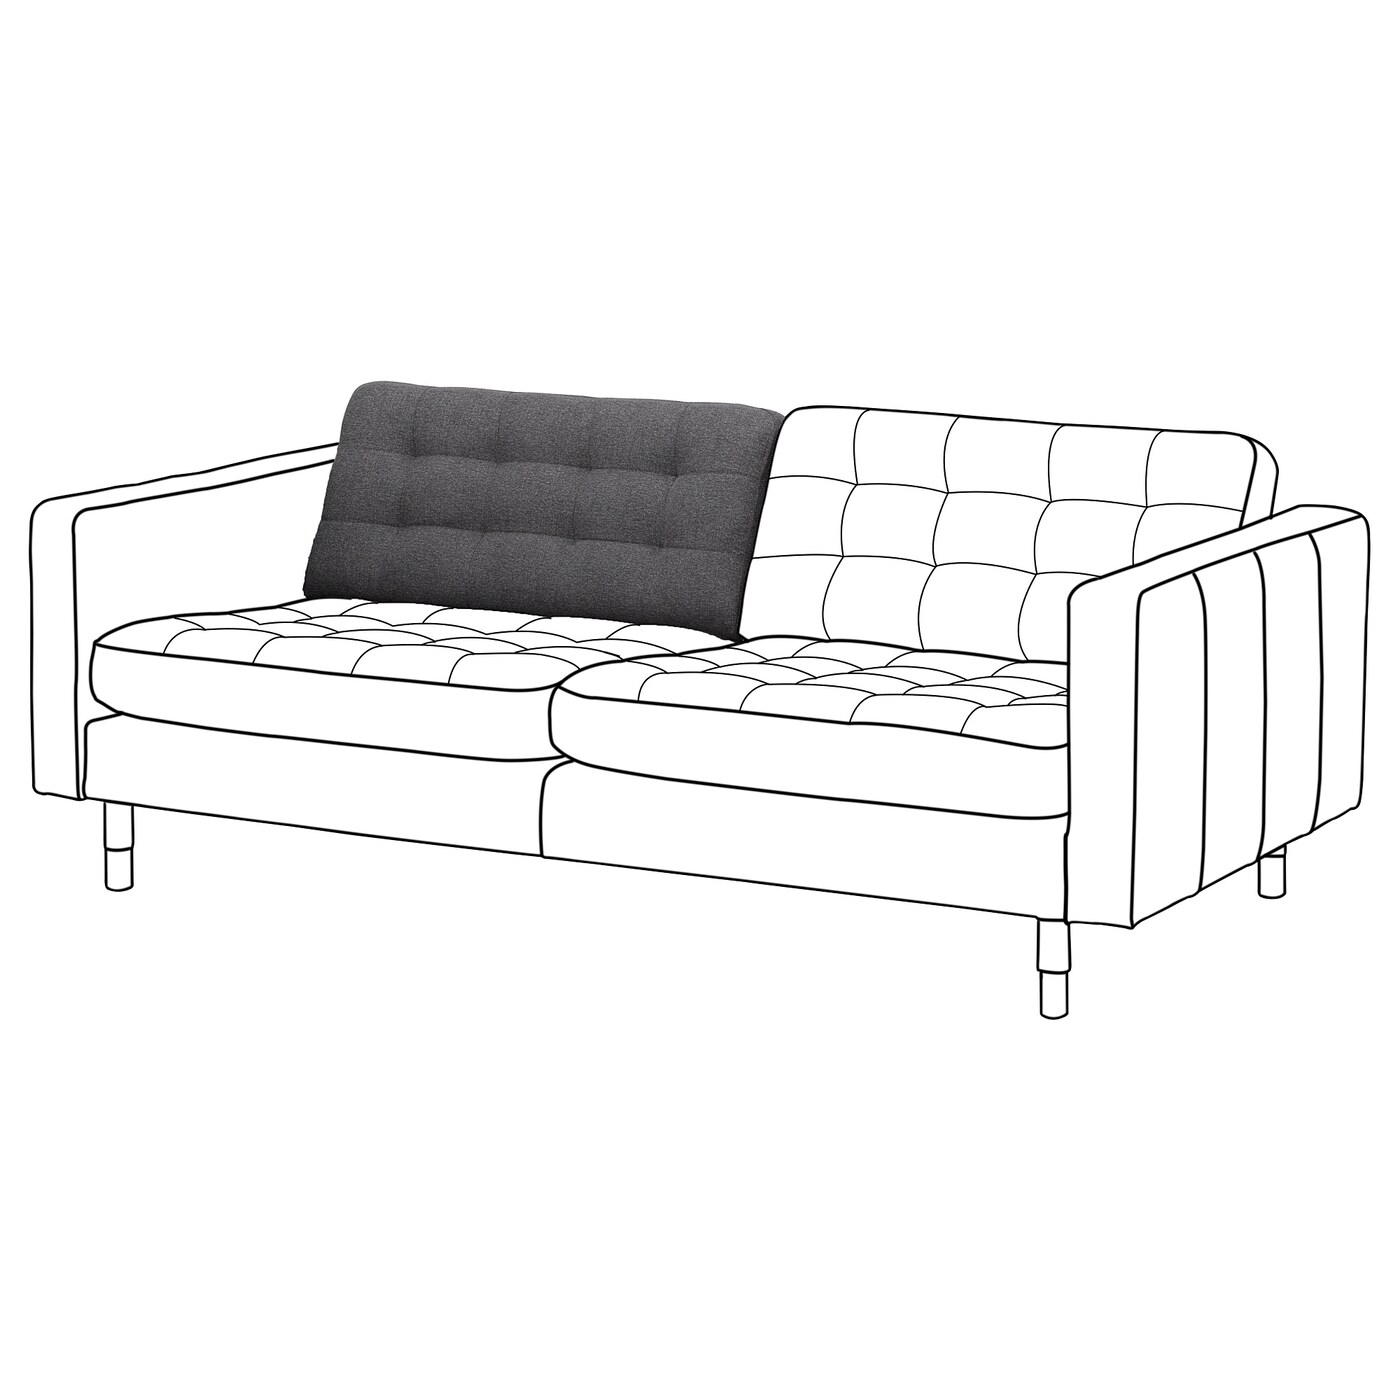 ИКЕА LANDSKRONA 3-місна подушка спинки дивана - Gunnared / темно-сіра запчастина, 004.980.28